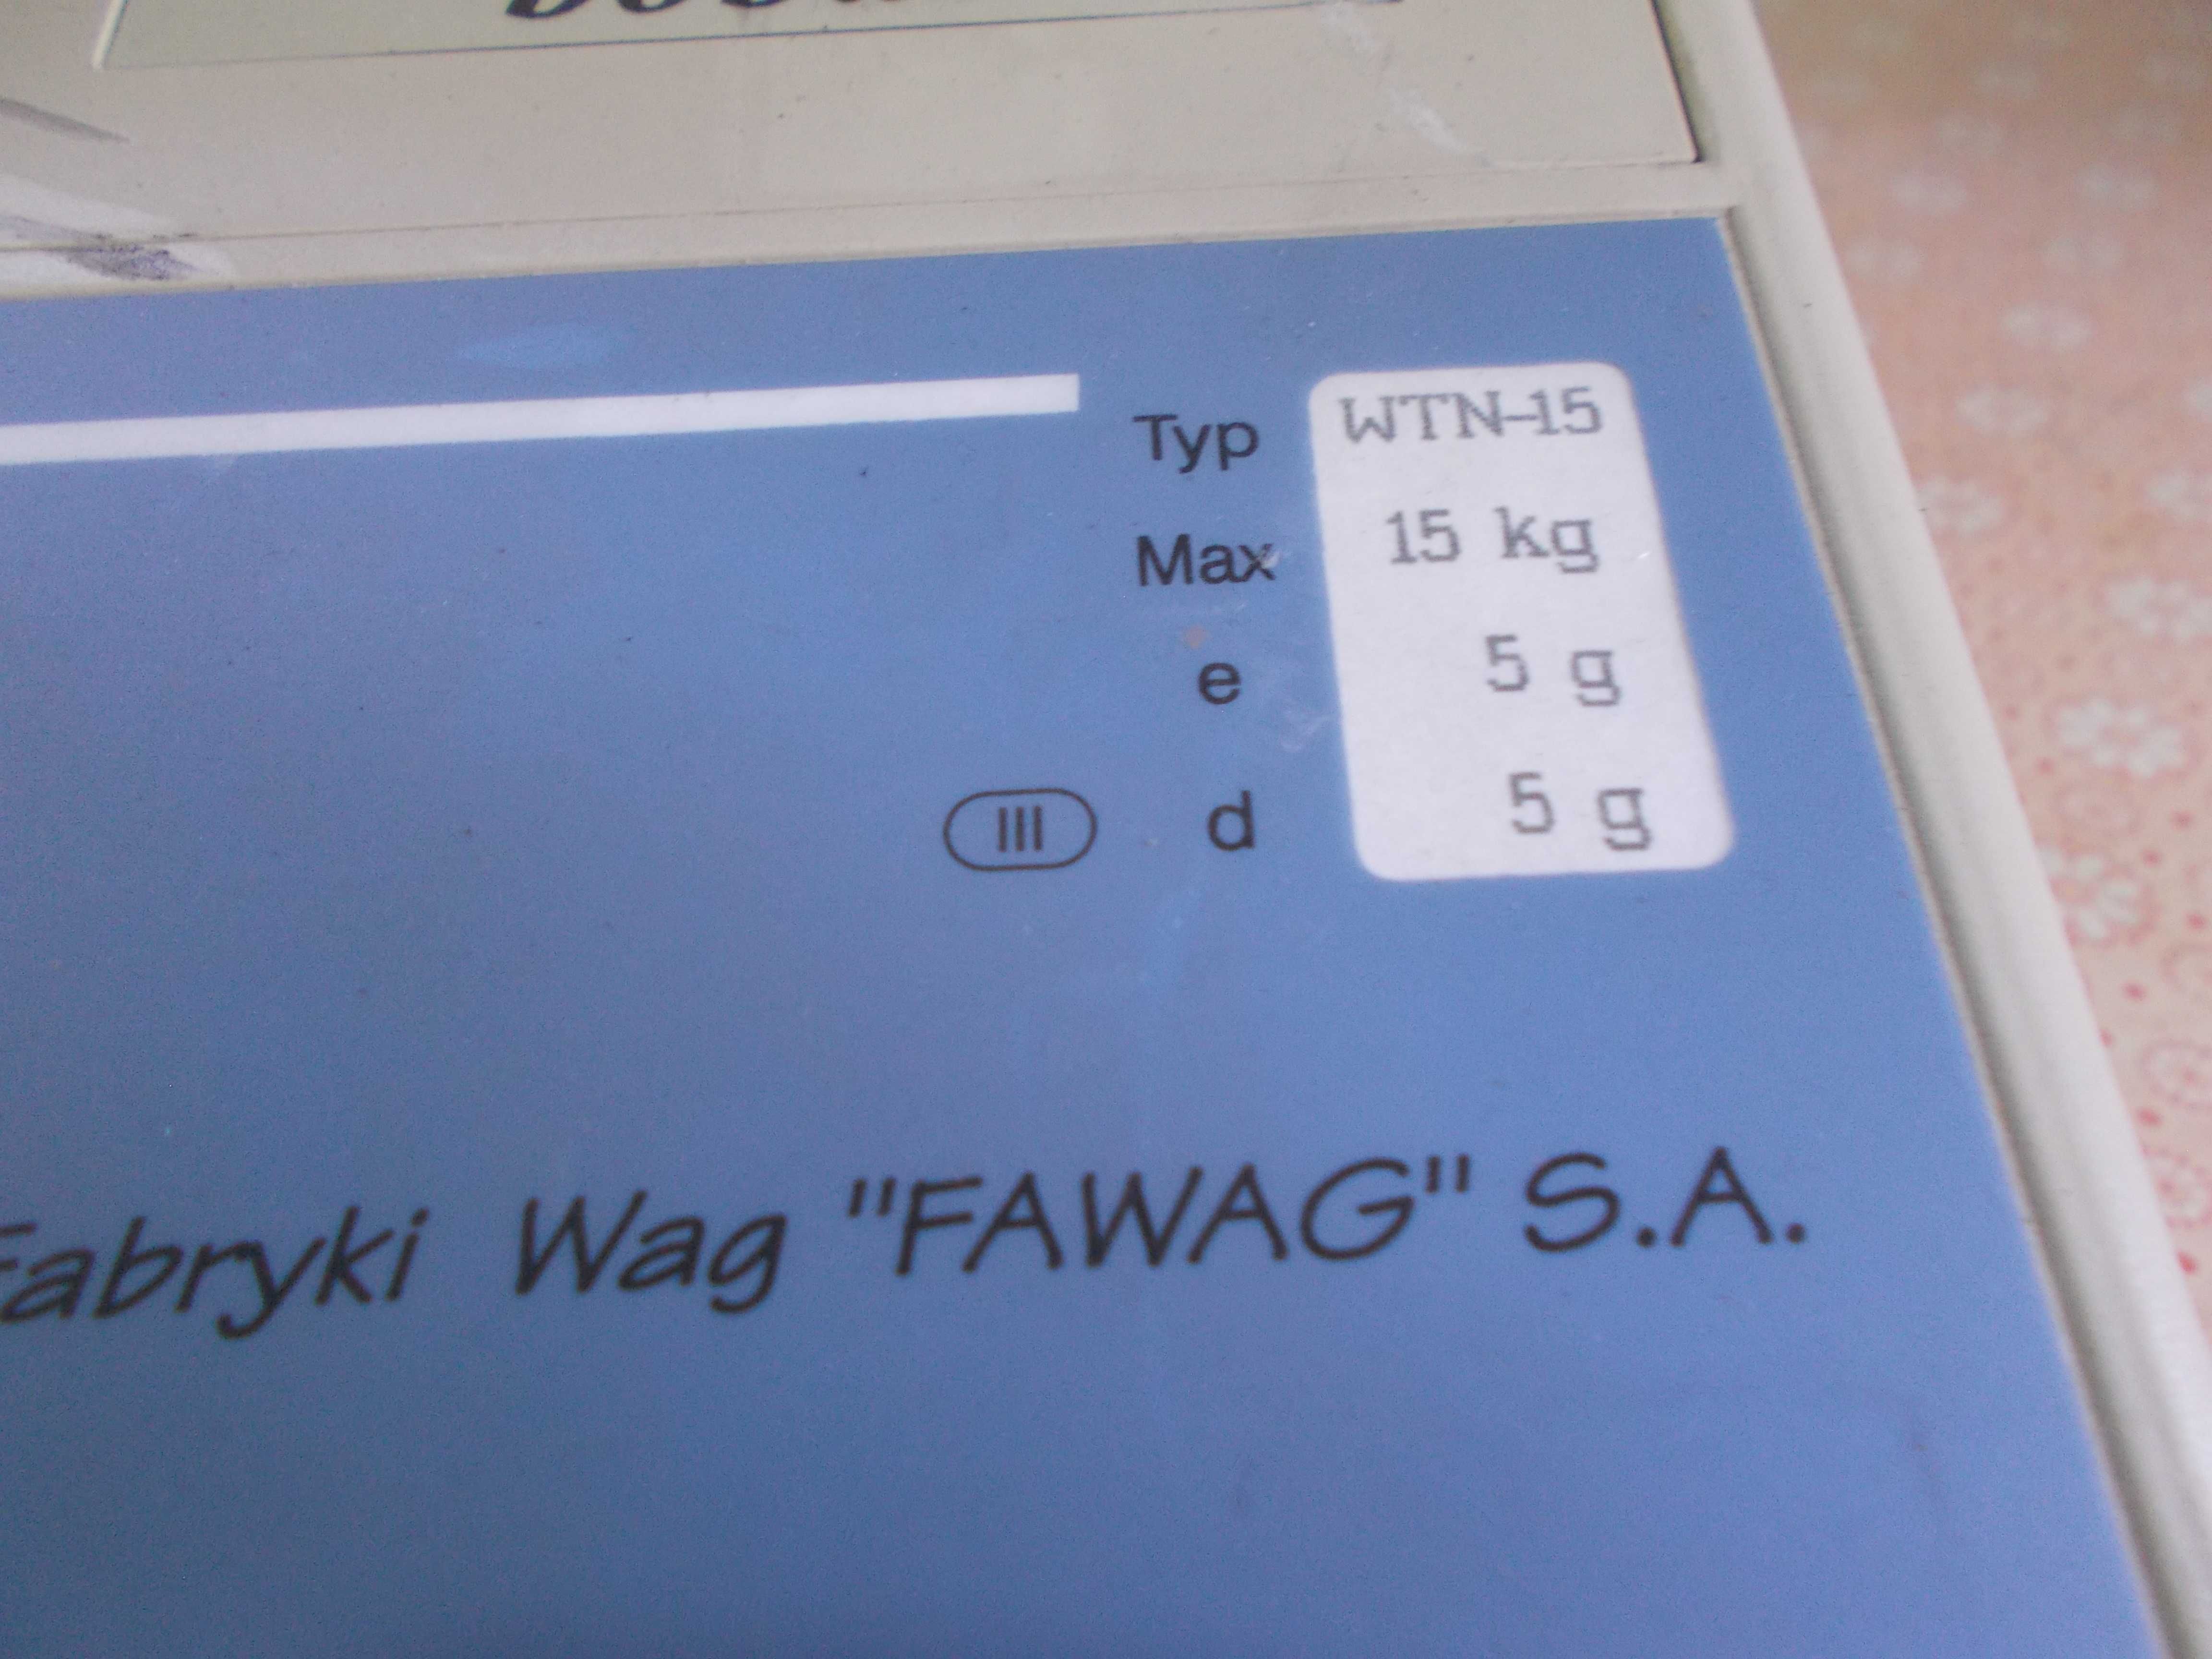 waga FAWAG WTN-15 od 100g do 15kg lubelskie fabryki wag